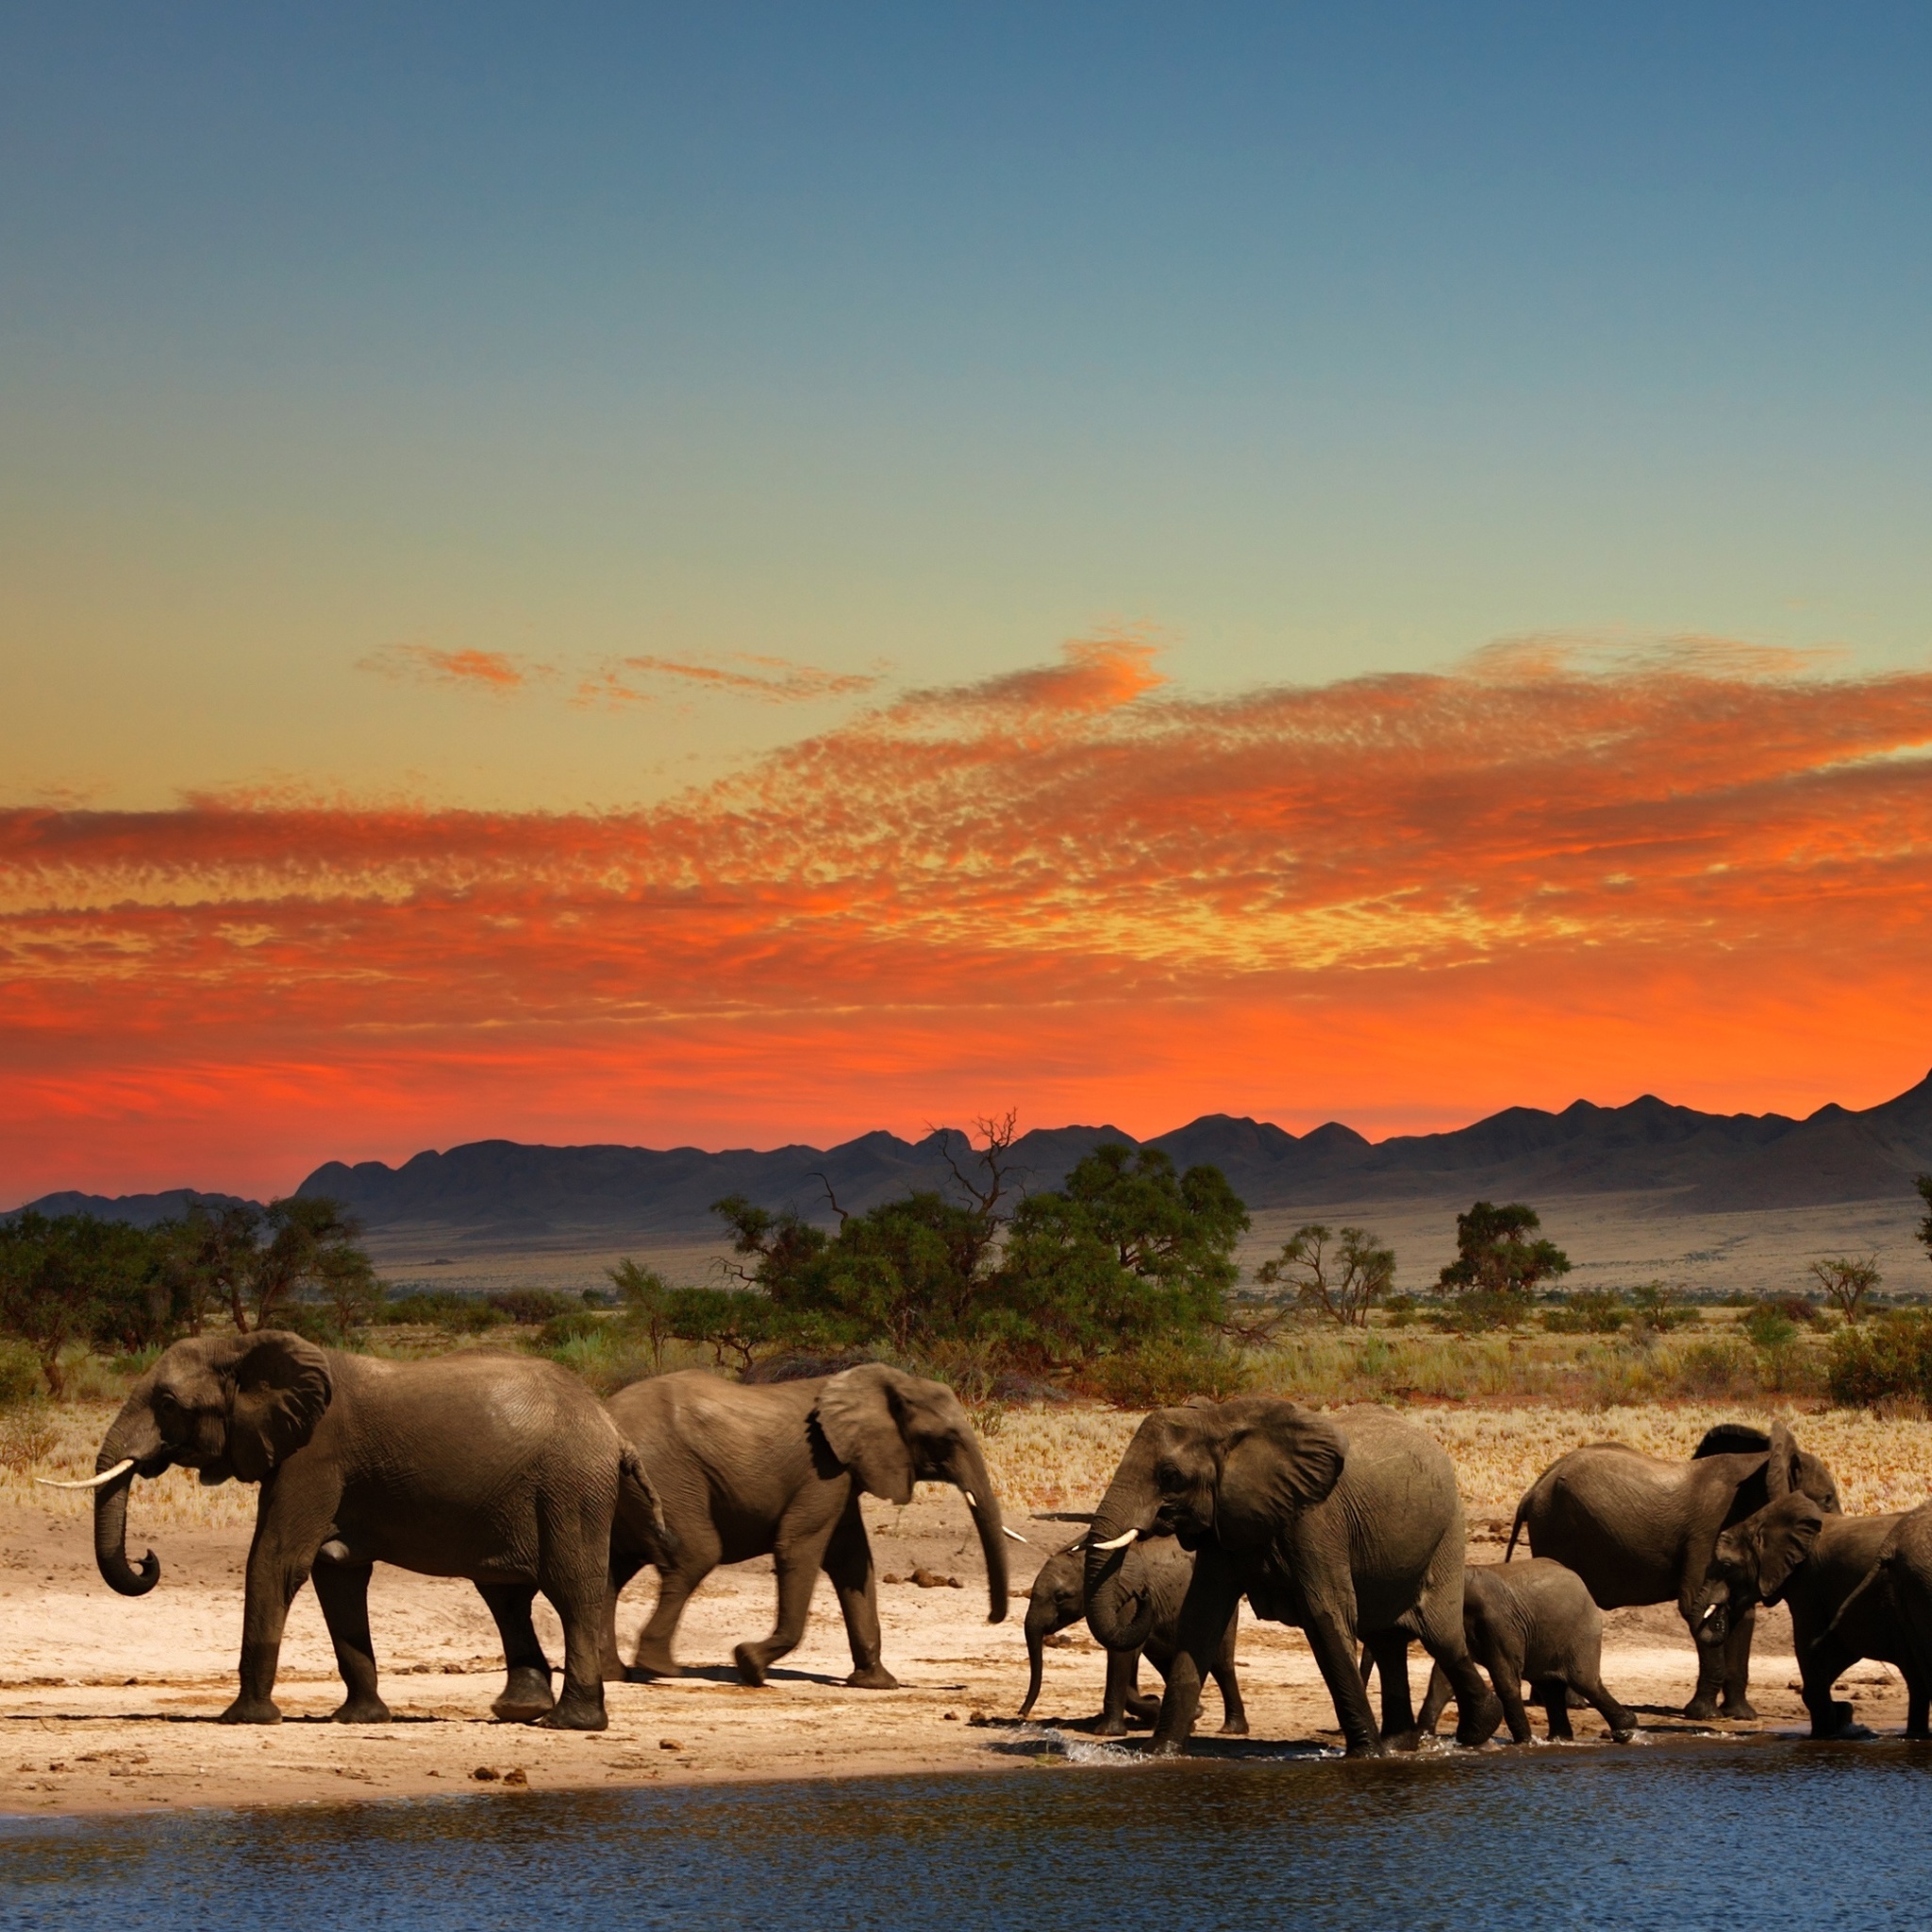 Das Herd of elephants Safari Wallpaper 2048x2048